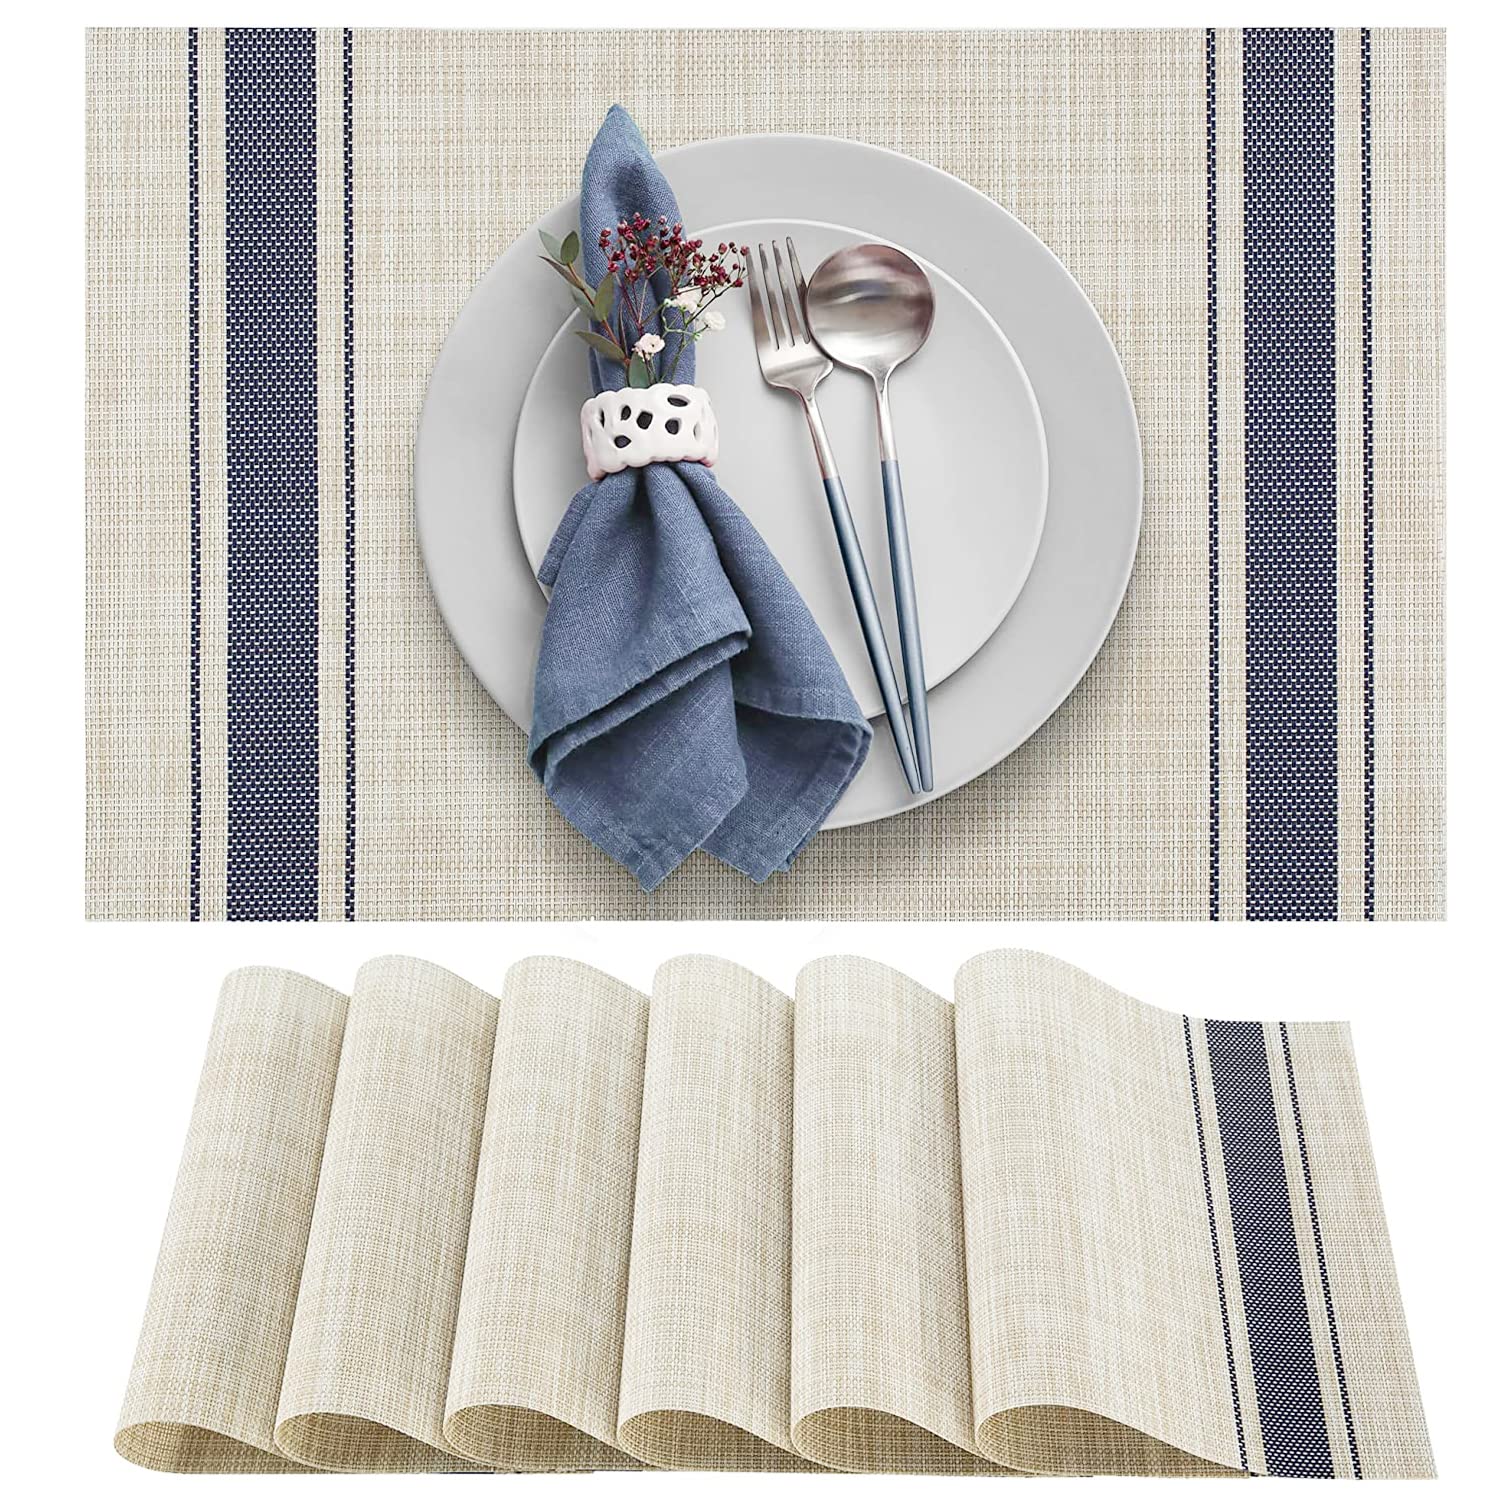 DACHUI Placemats Set of 6, Soft & Elegant Woven Vinyl Place Mats, Water Resistant, Heat Resistant, Washable, Durable Table Mats (Blue Stripes)